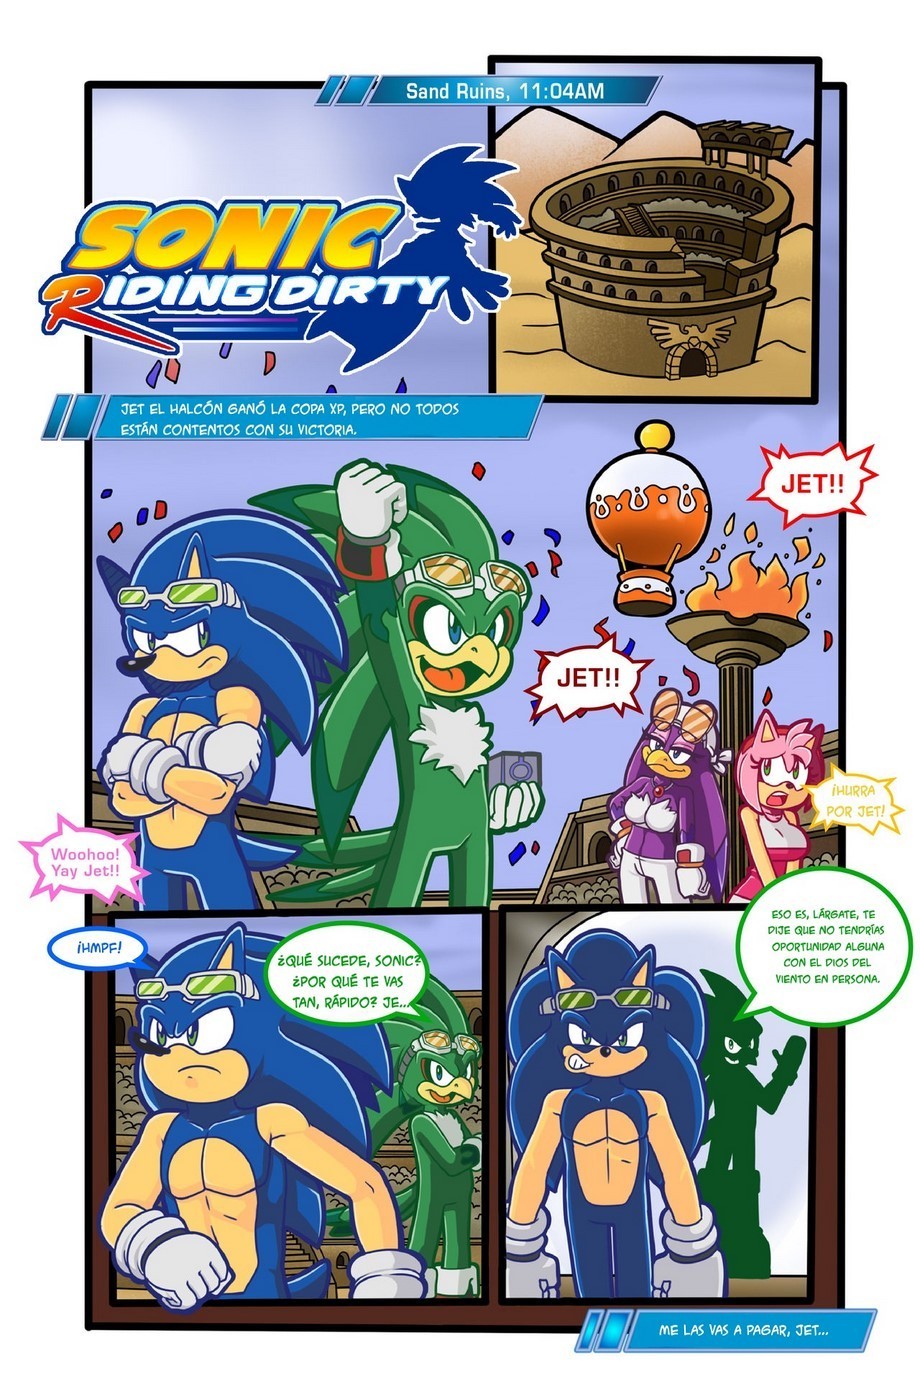 Sonic Riding Dirty - d19fb417318d0ad23deae2d1a0eeabcc